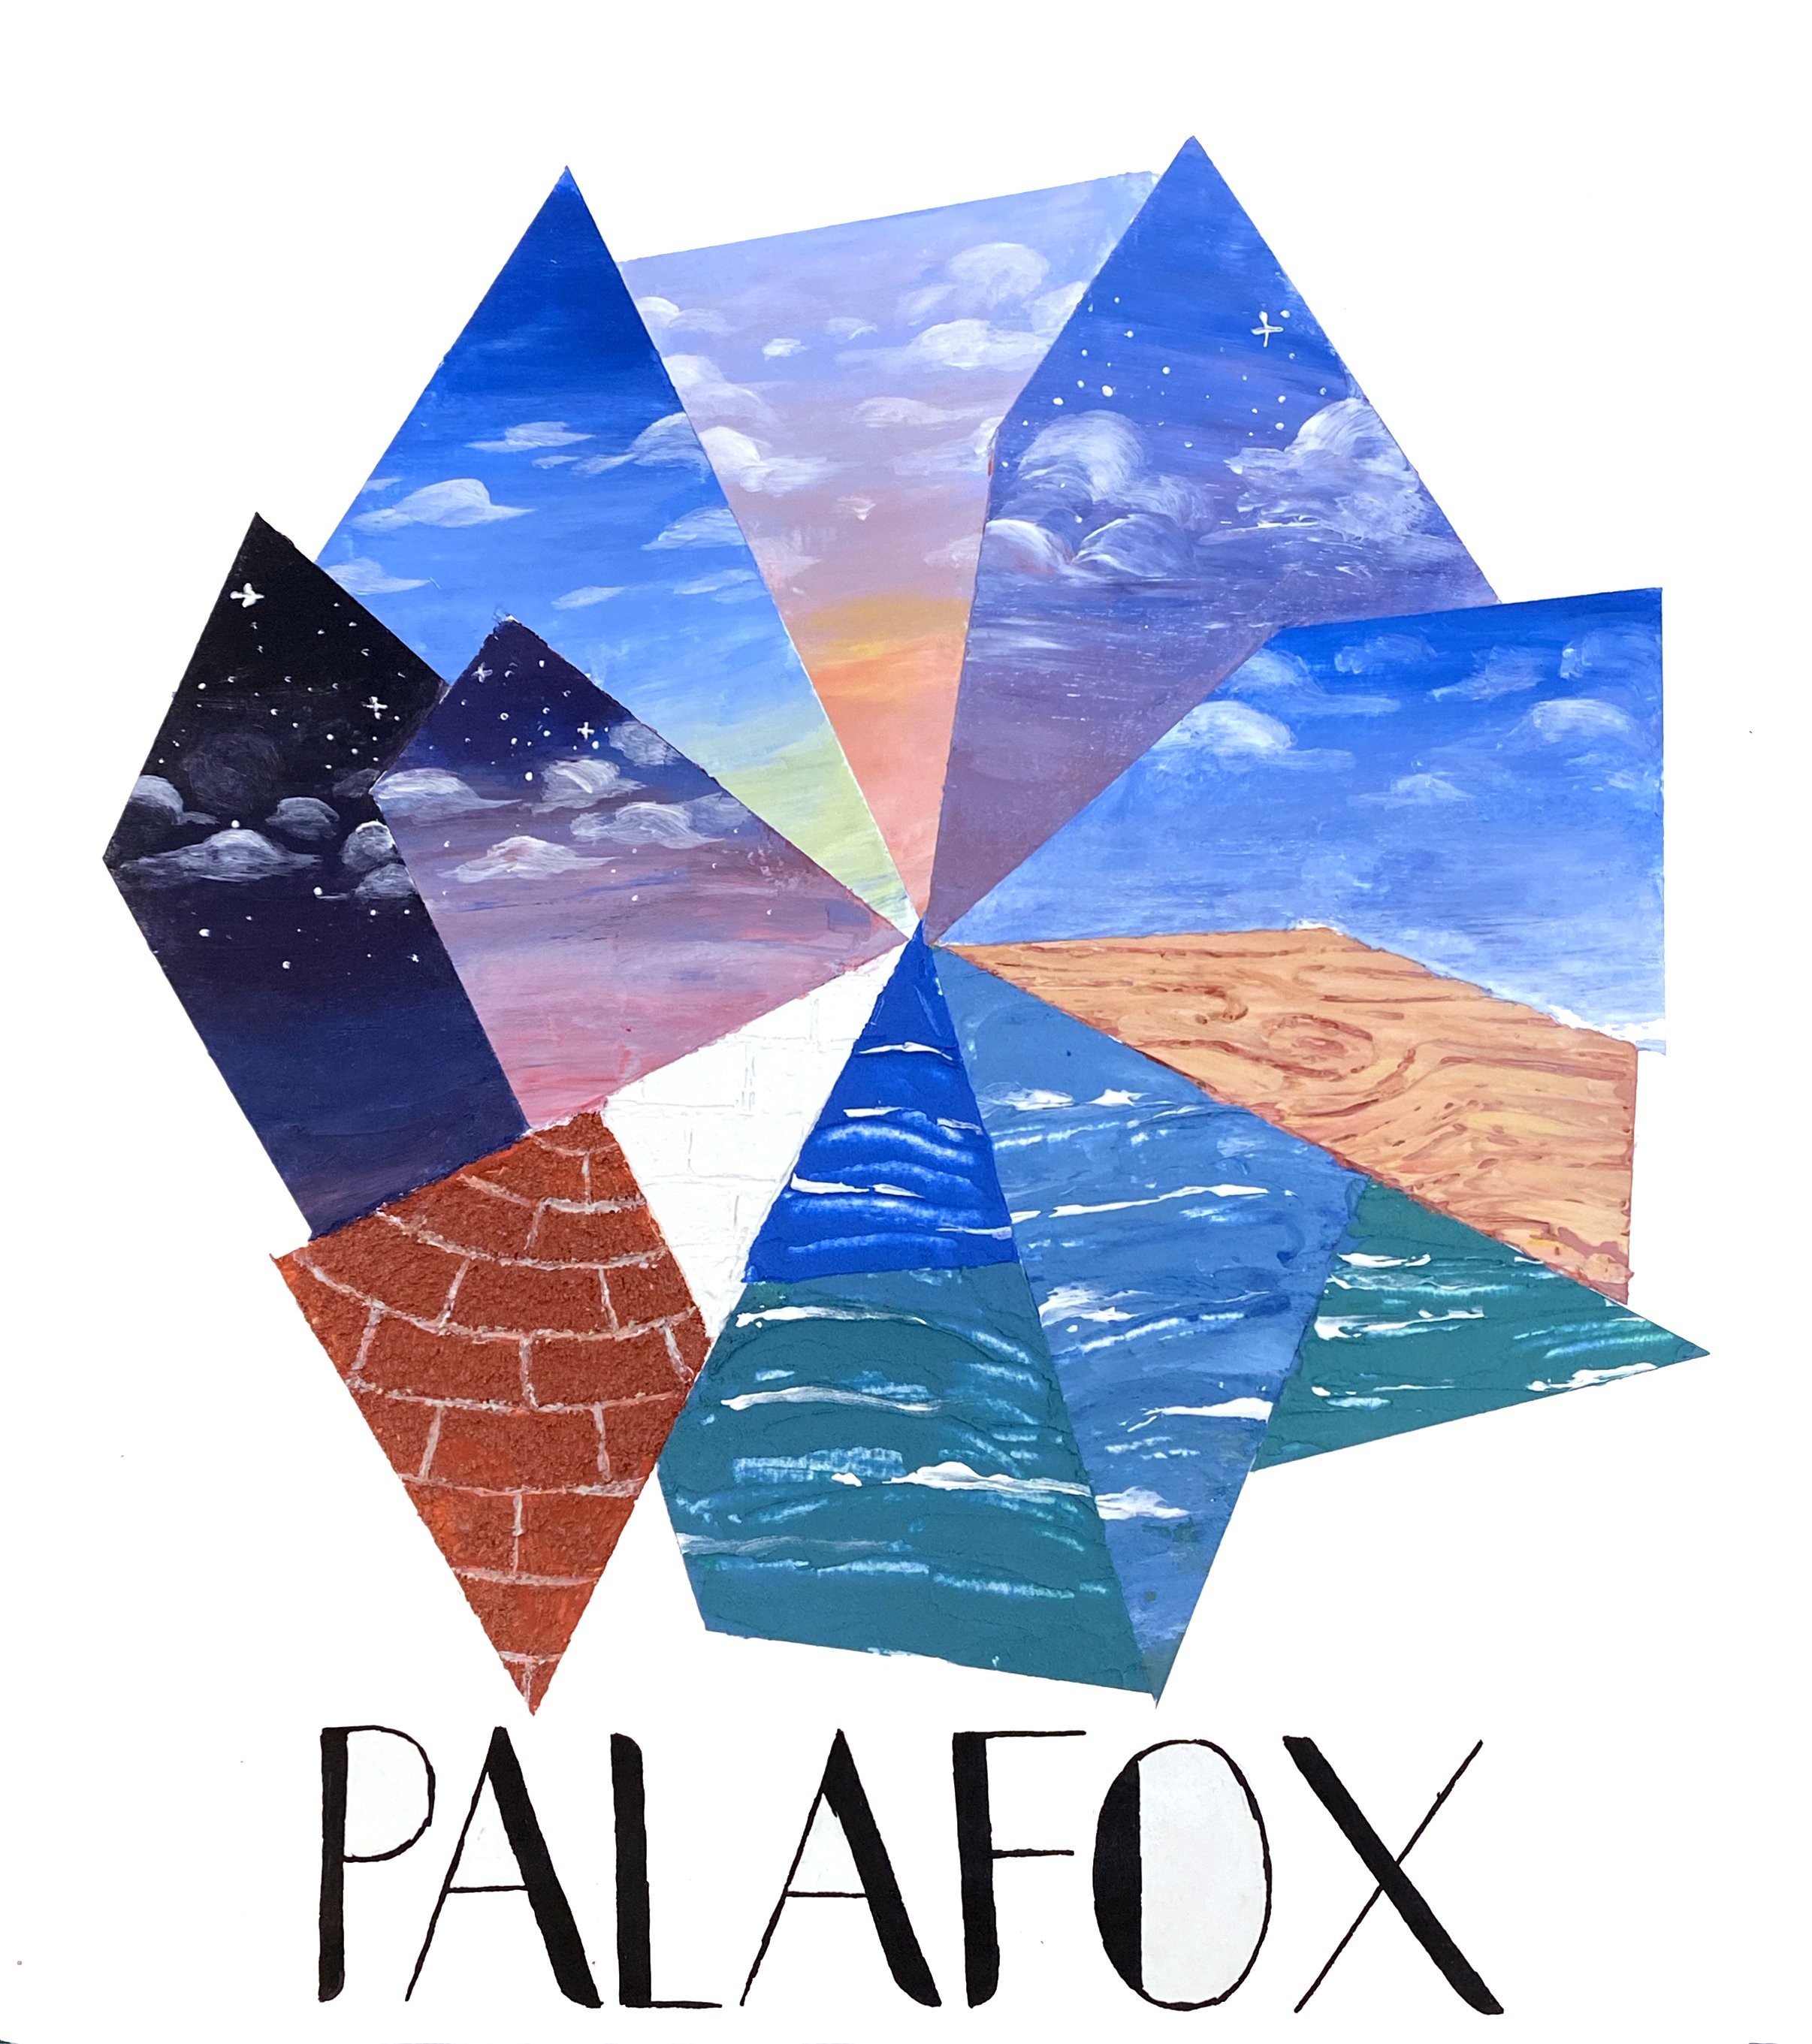 Palafox